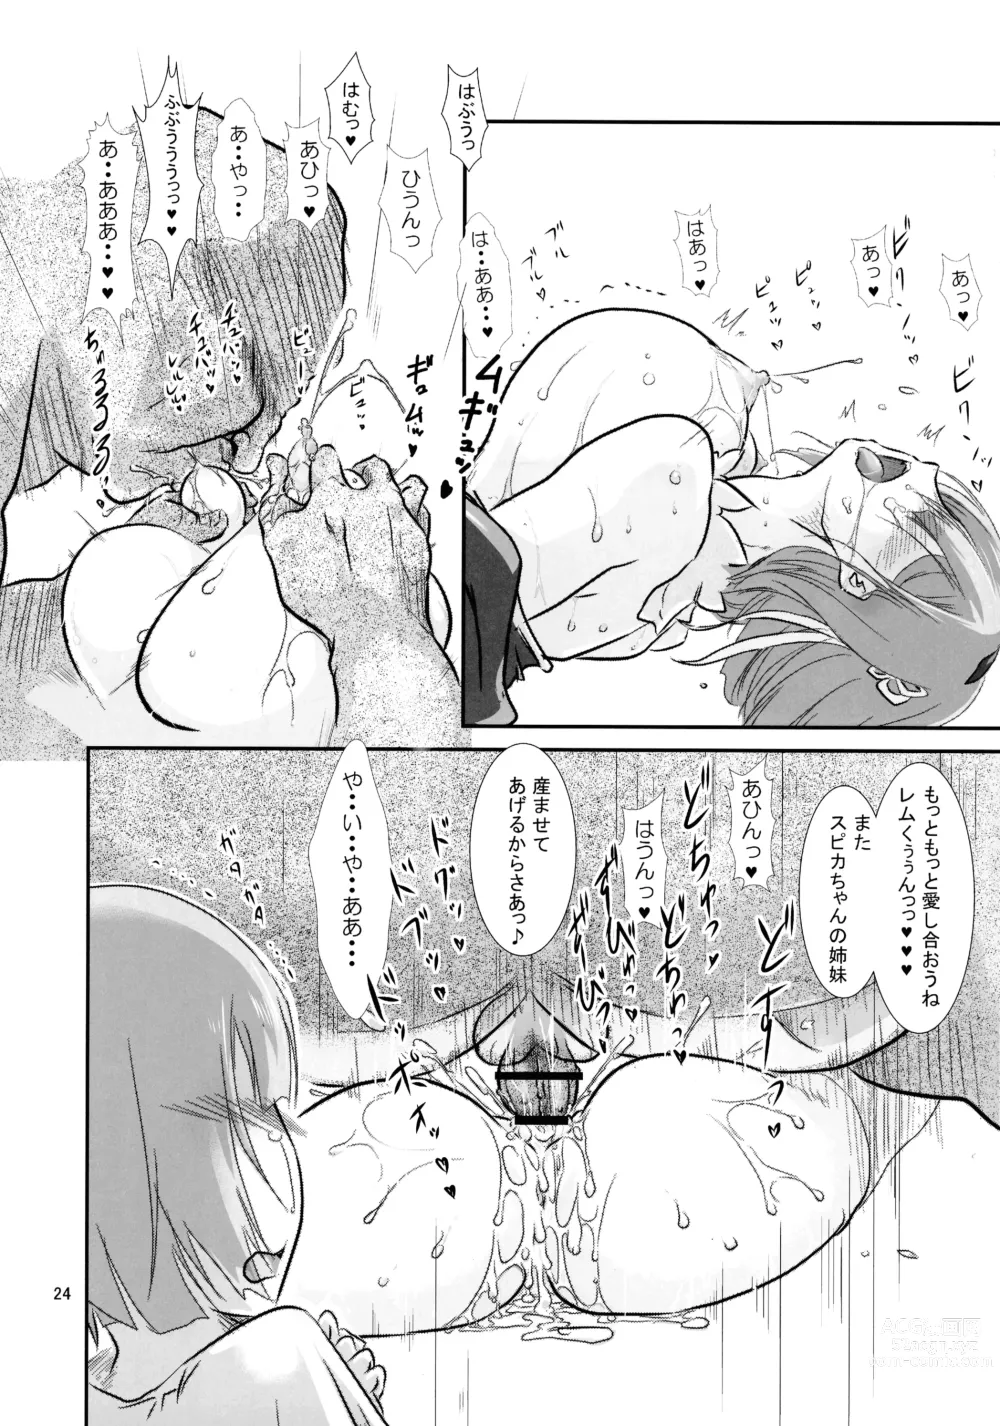 Page 24 of doujinshi Rem: Rem Danshou Hitozuma Rem no Ero Manga Pairotto-ban